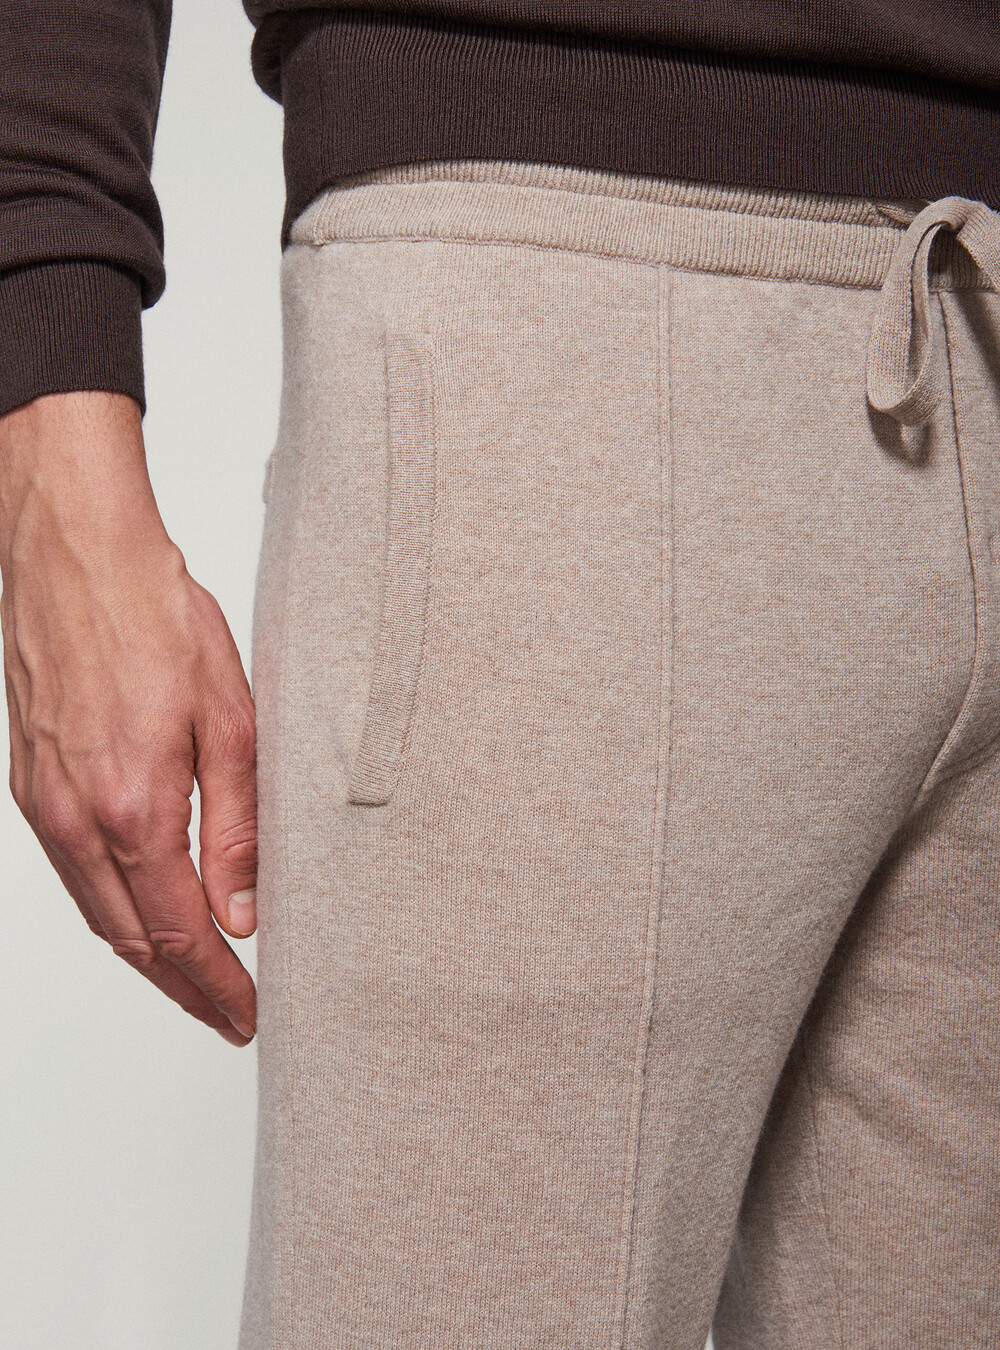 Pantaloni tuta in lana cashmere | Gutteridge |  catalog-gutteridge-storefront Uomo